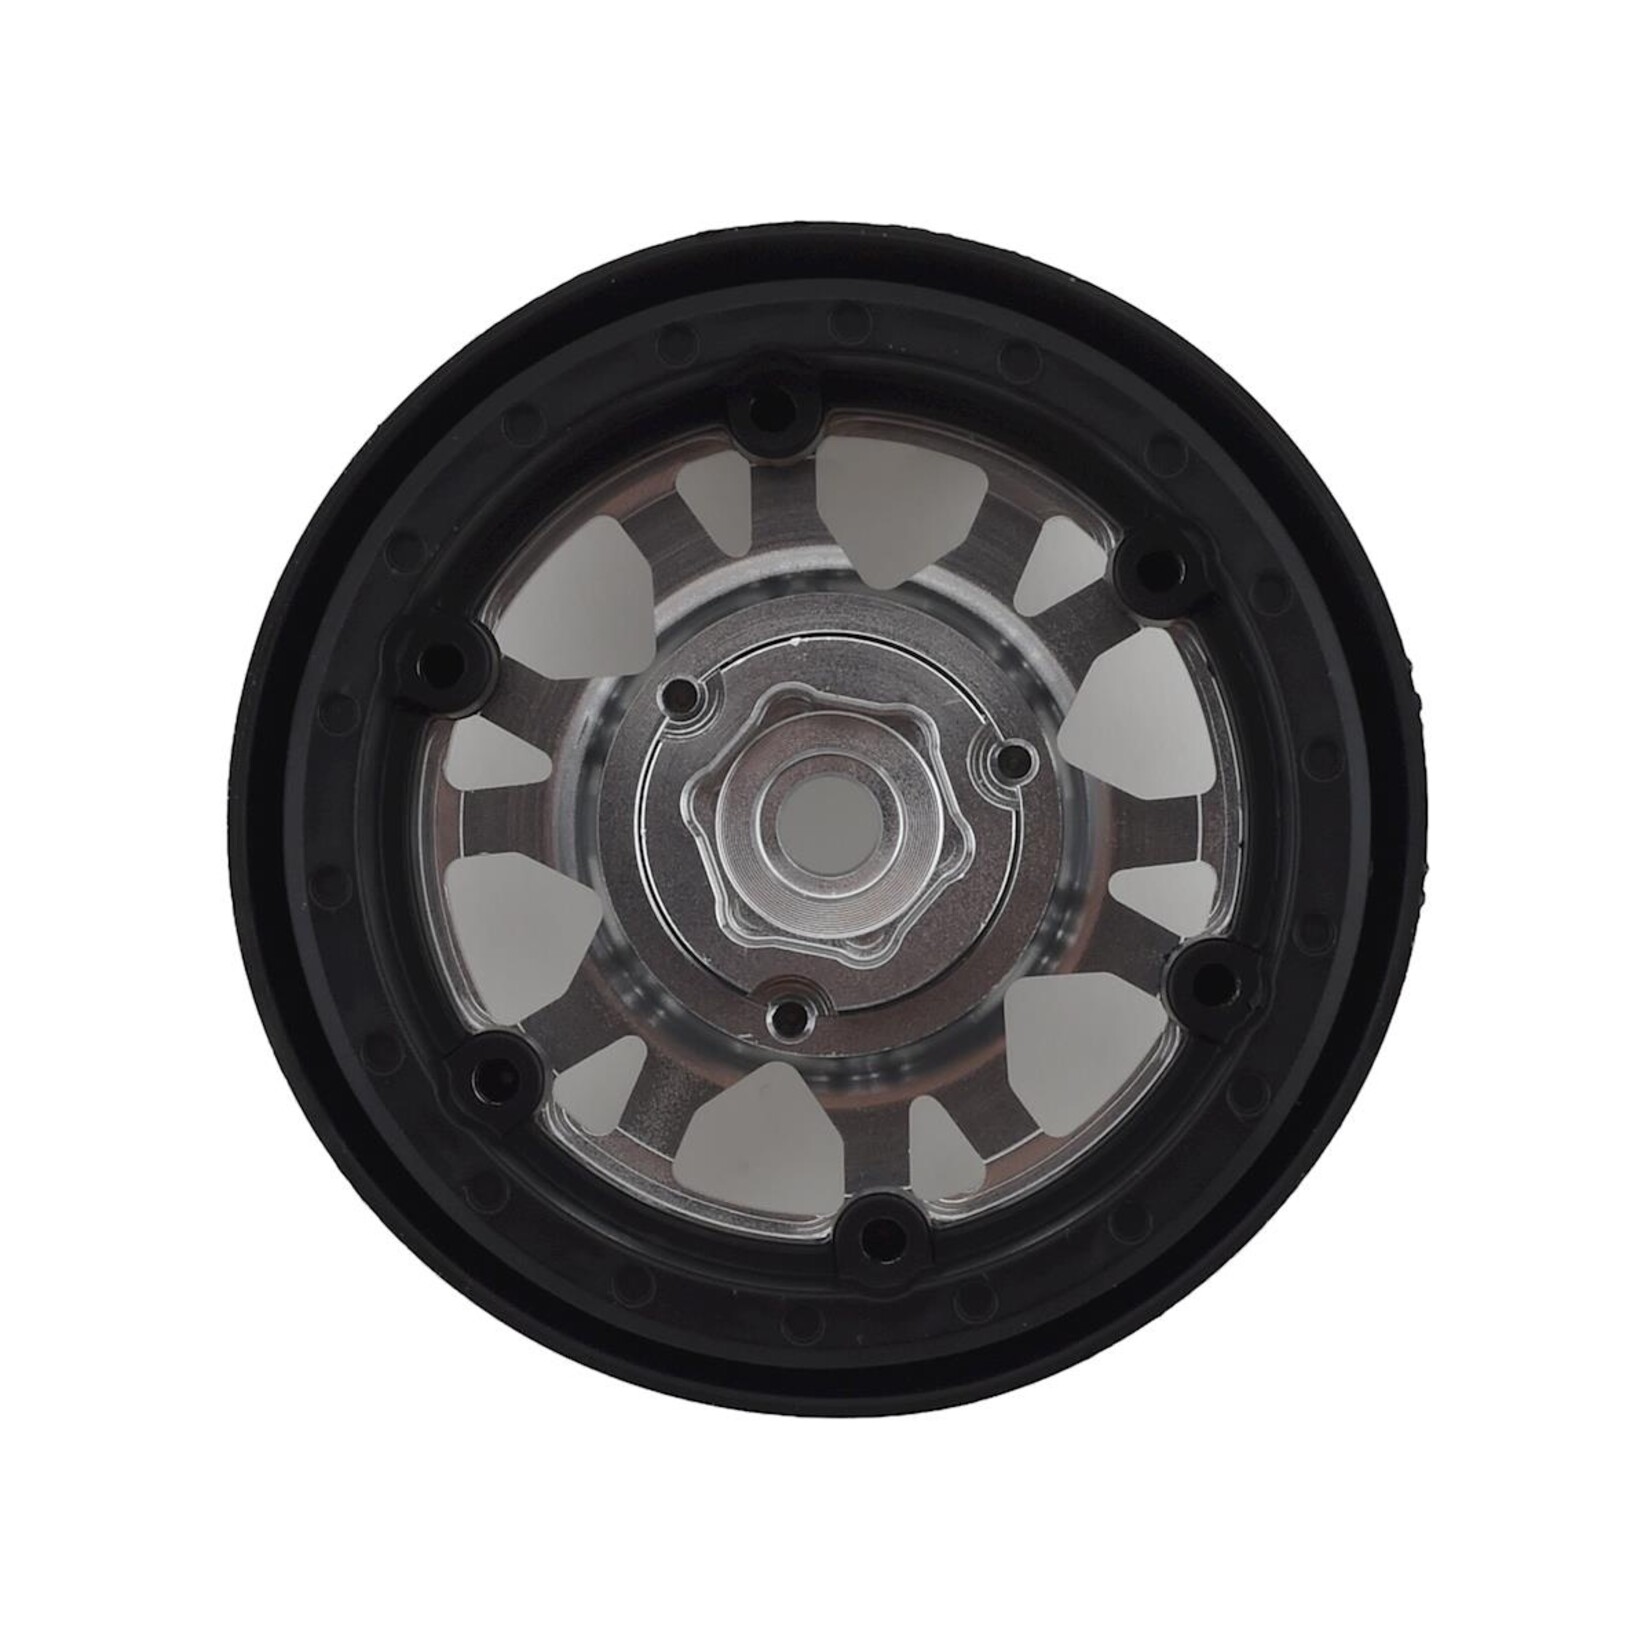 Pro-Line Pro-Line Impulse 1.9" Aluminum Composite Internal Bead-Loc Wheels (2) #2790-00